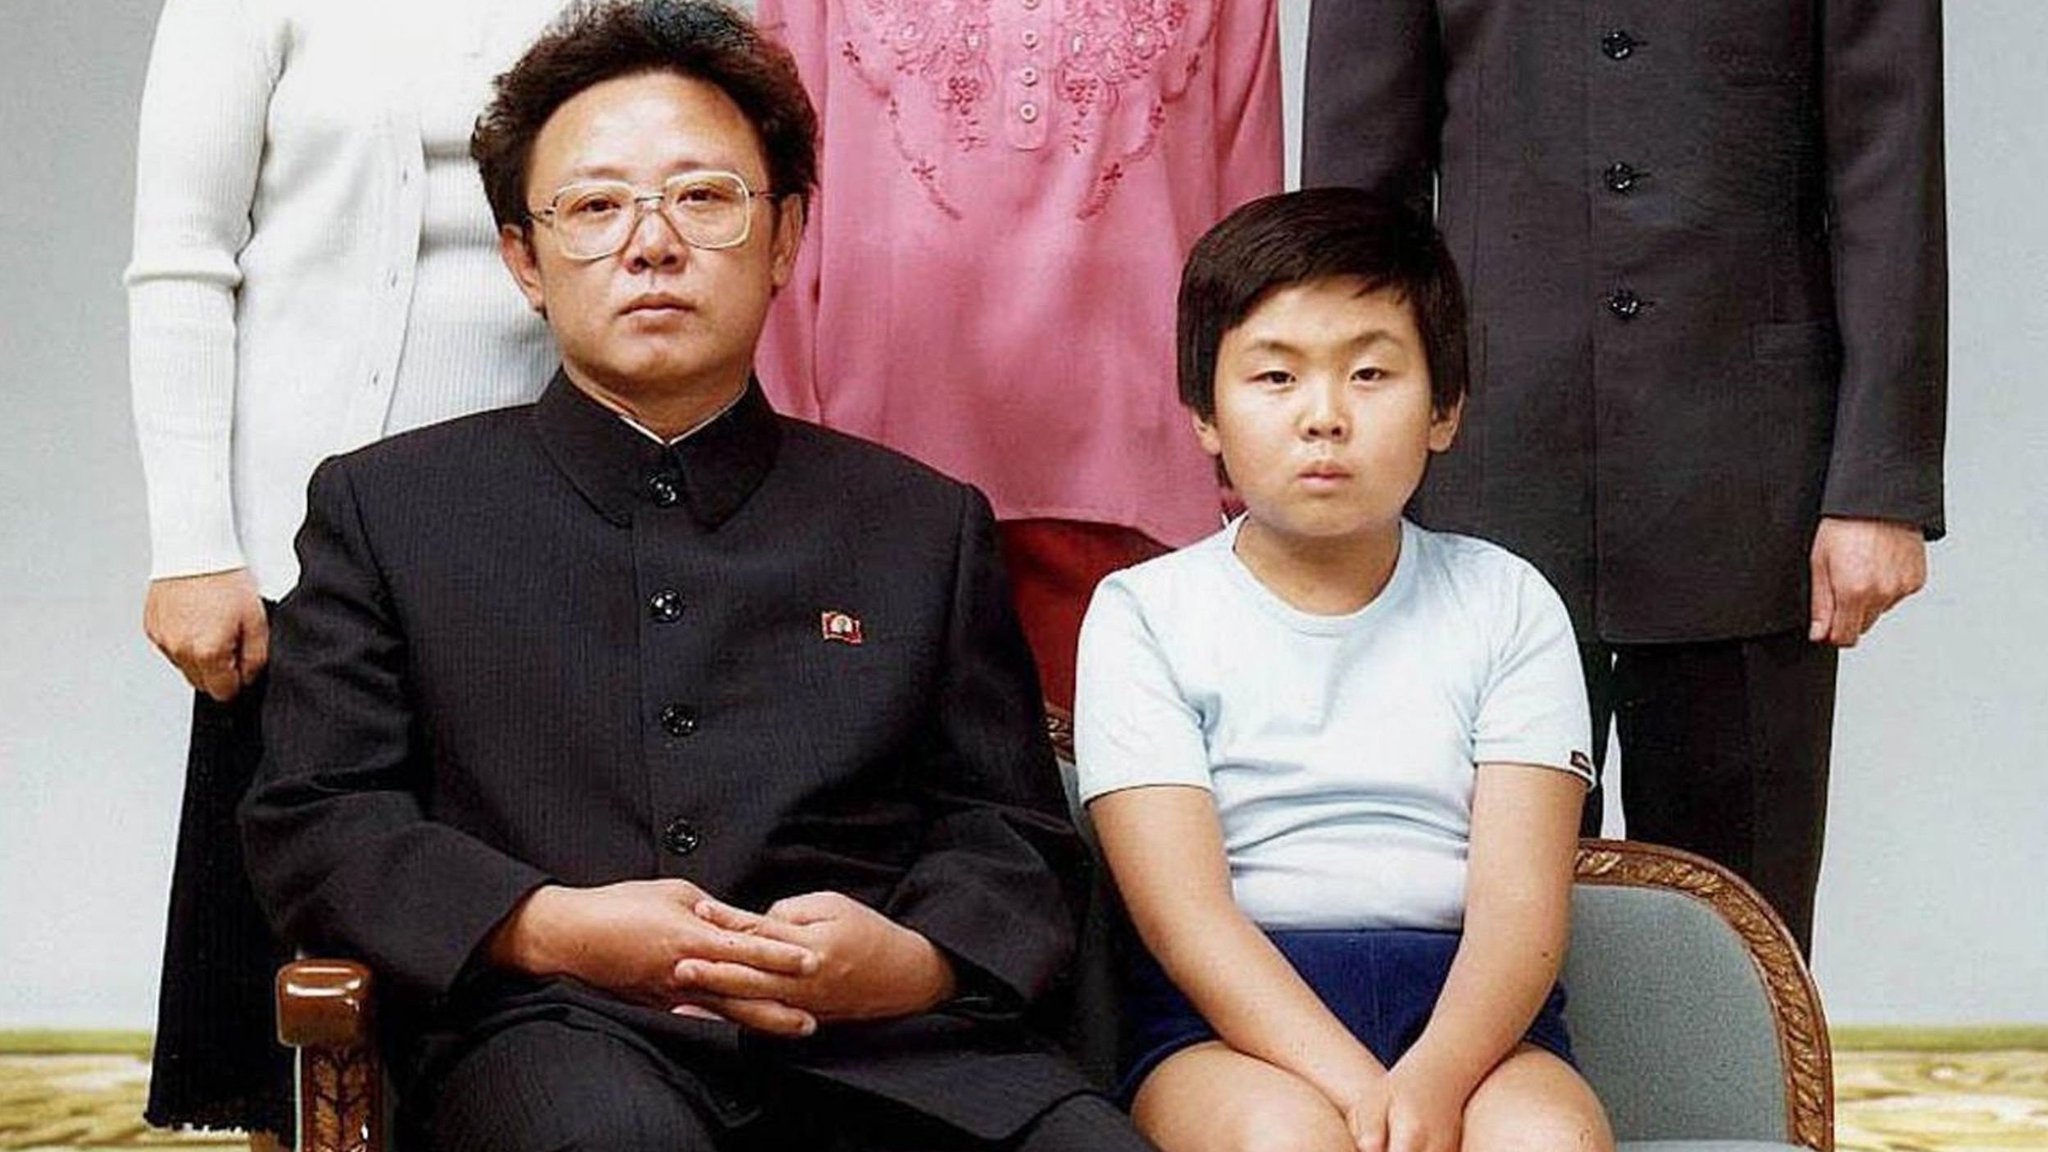 Kim Jong-nam elder half brother of Kim Jong-un, the dictator of North Korea